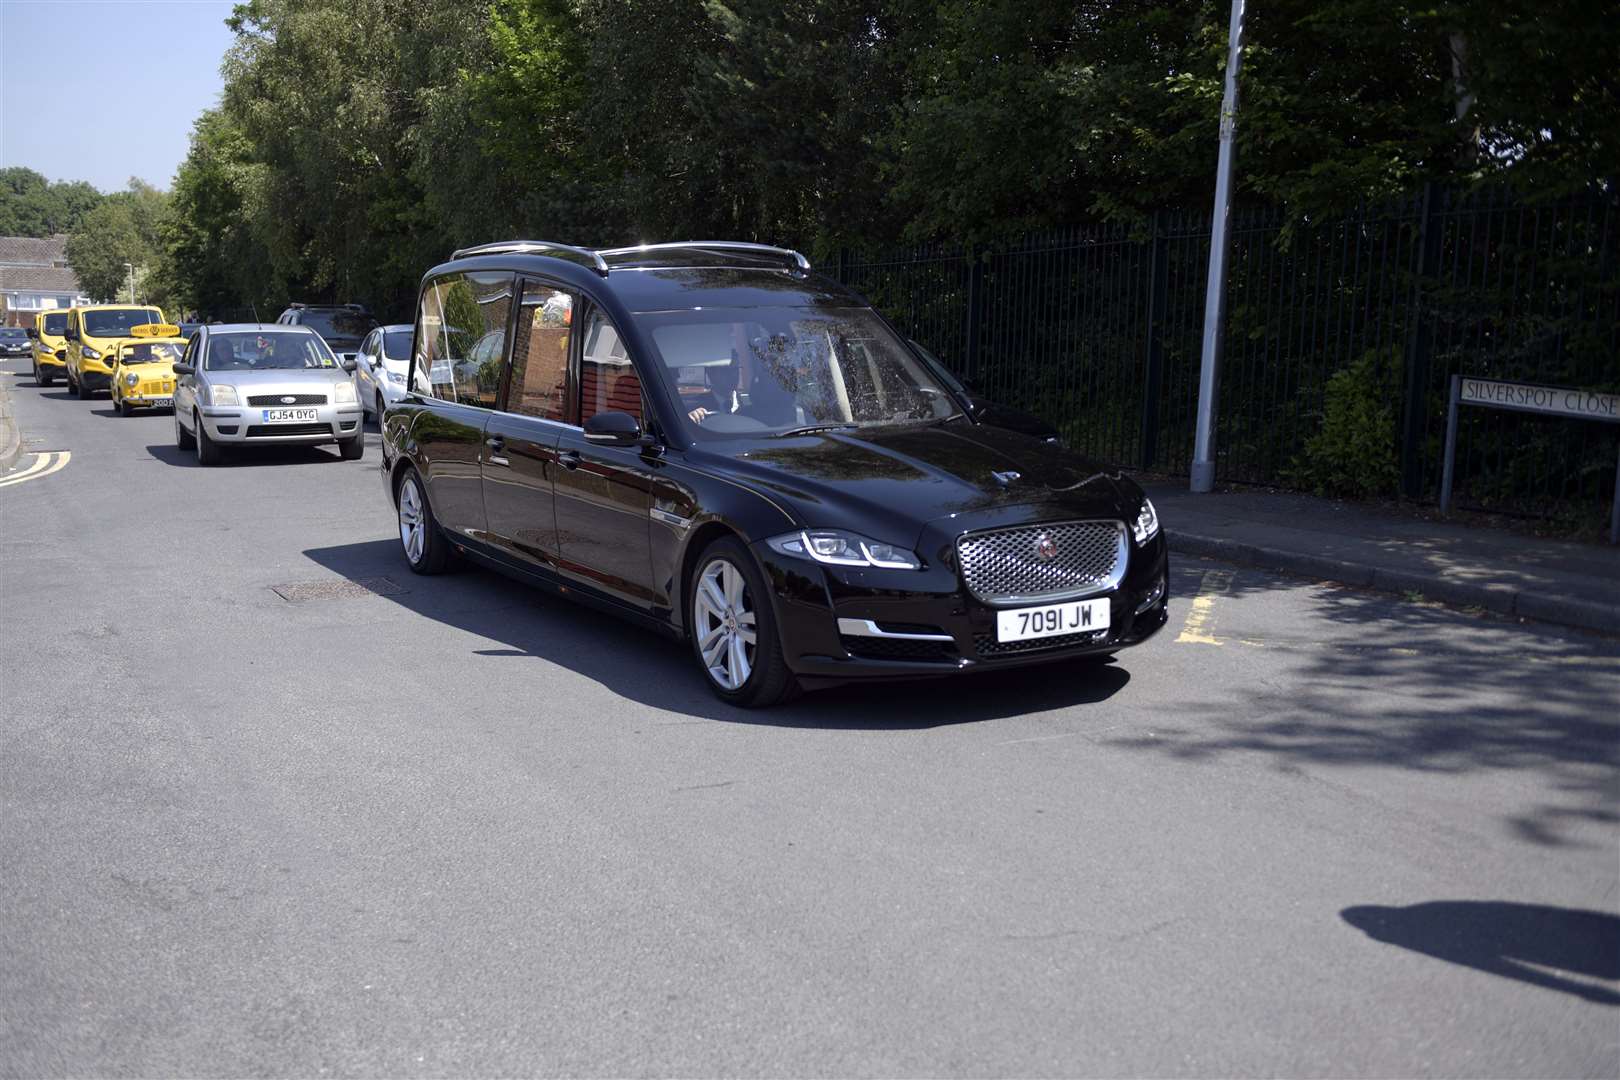 Several AA vans joined the funeral cortege as it left Mr Burridge's home in Rainham. Picture: Barry Goodwin